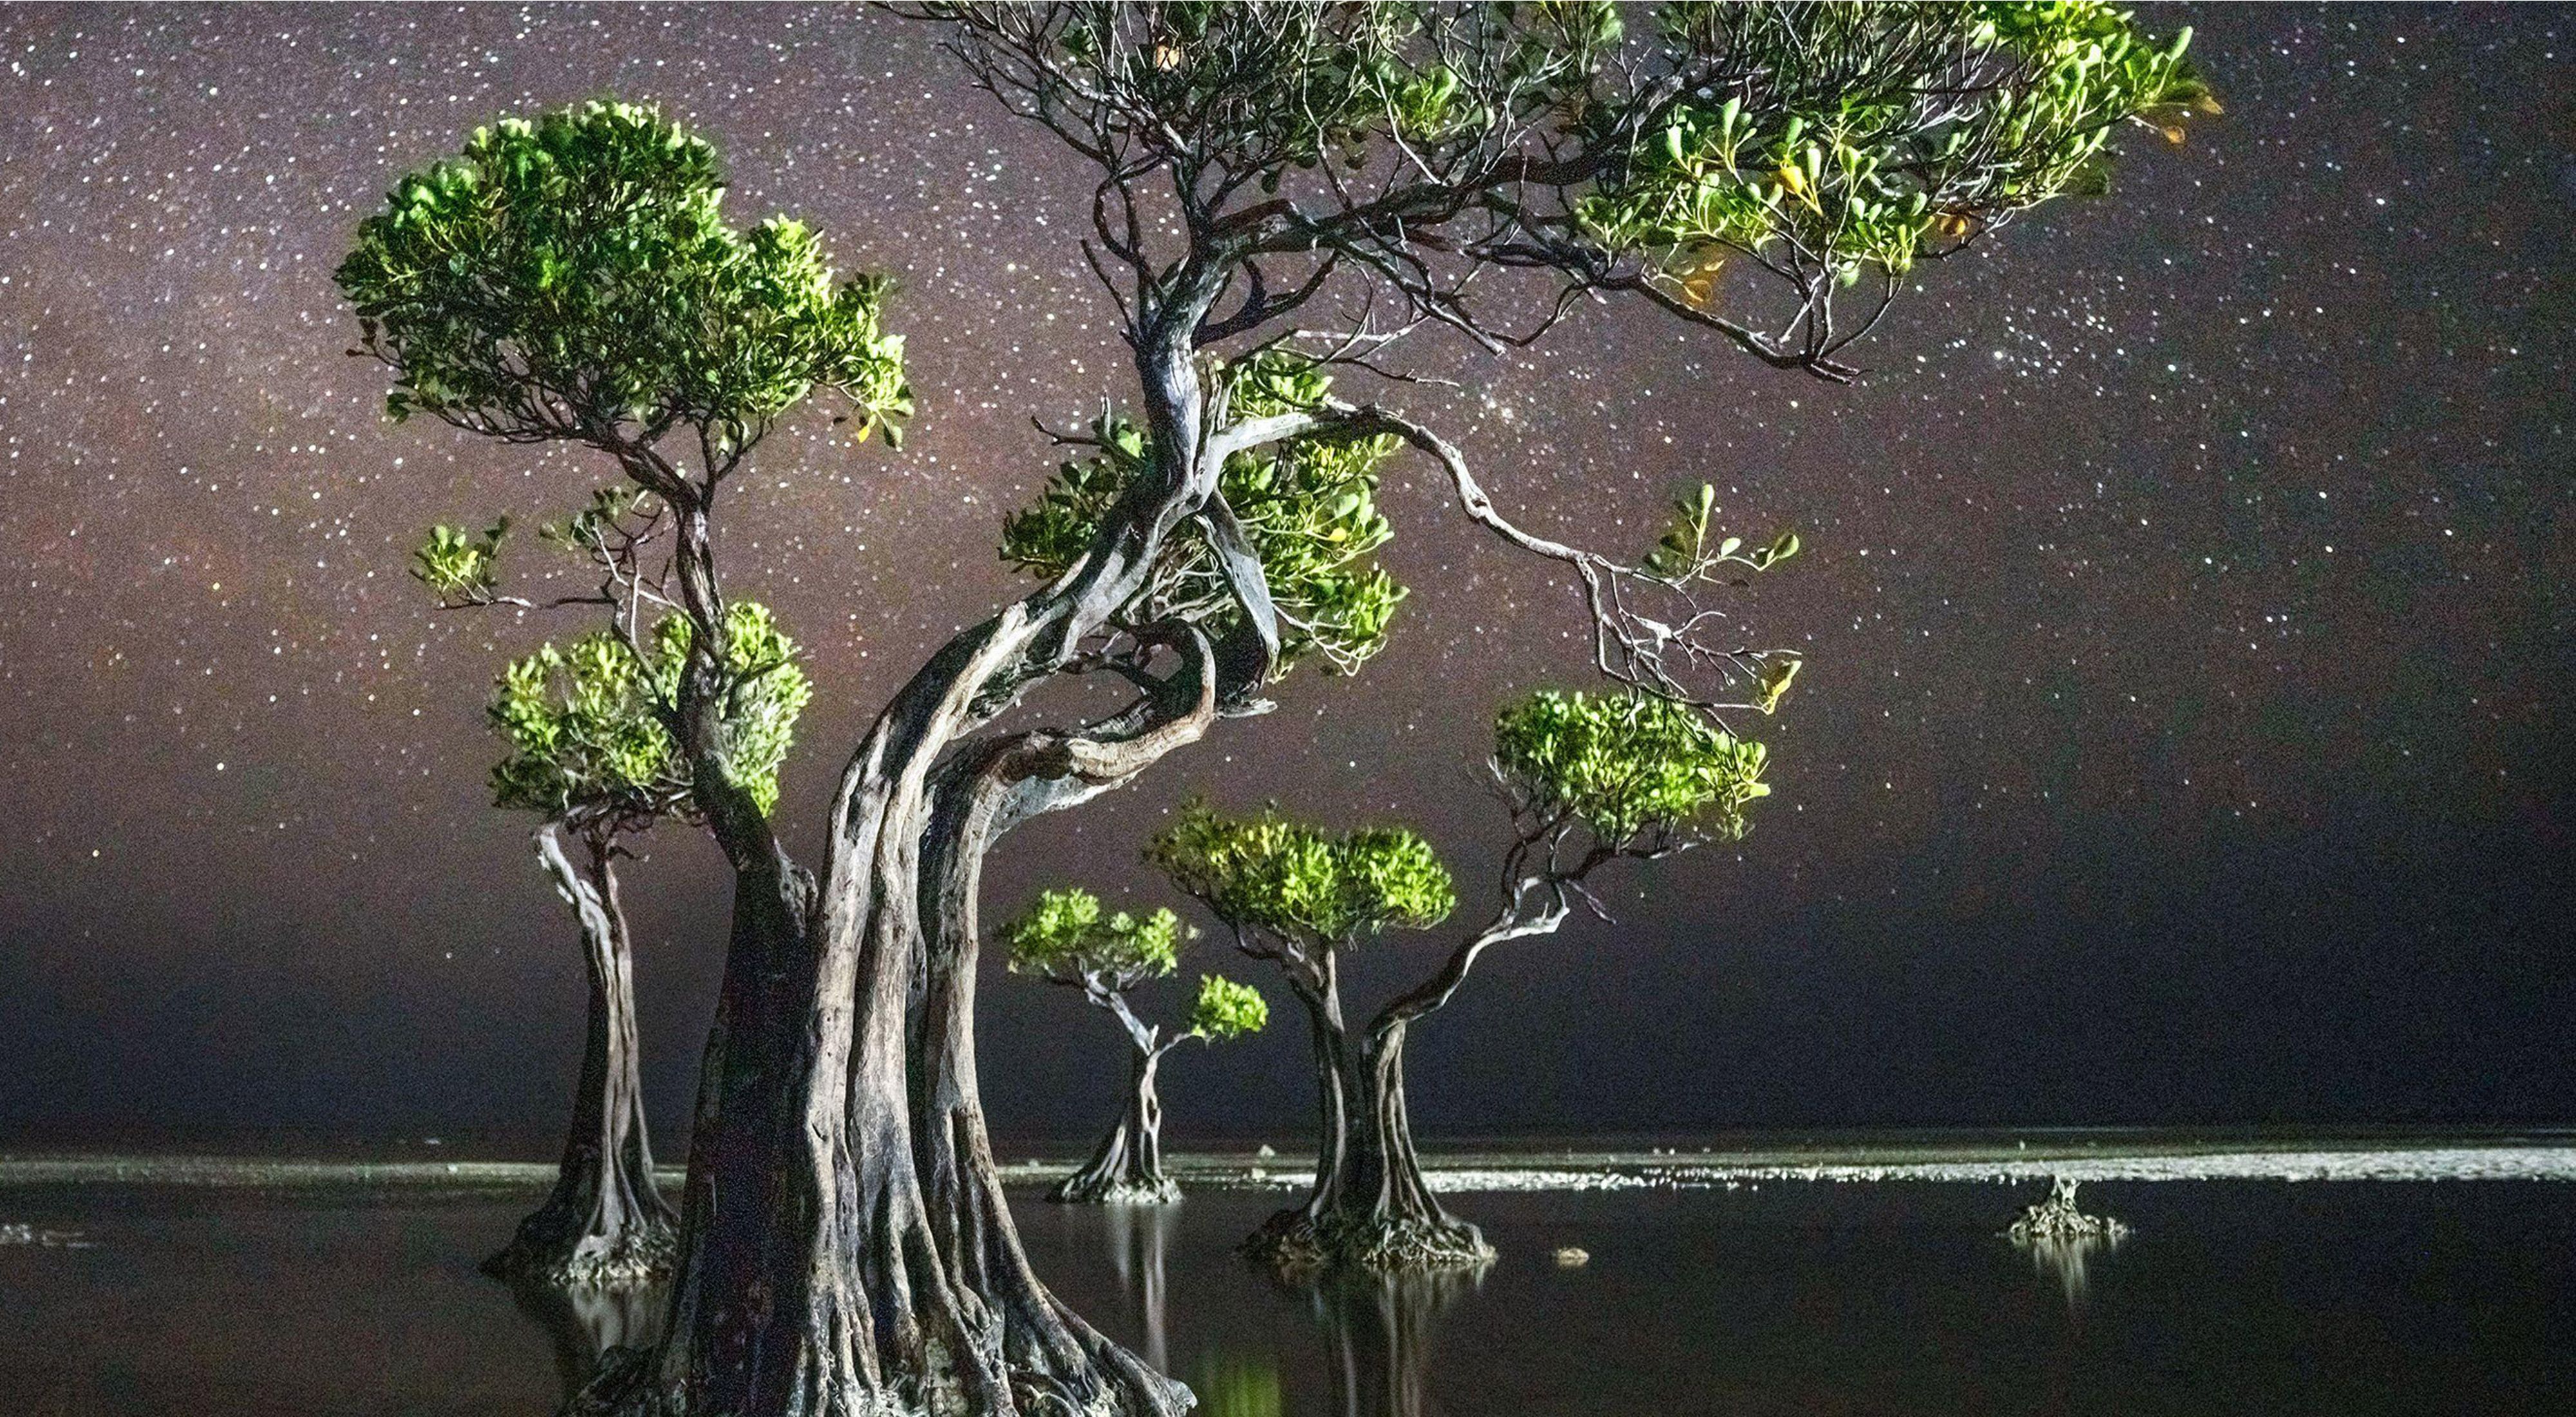 Mangrove trees on Walakiri Beach in Indonesia against the night sky